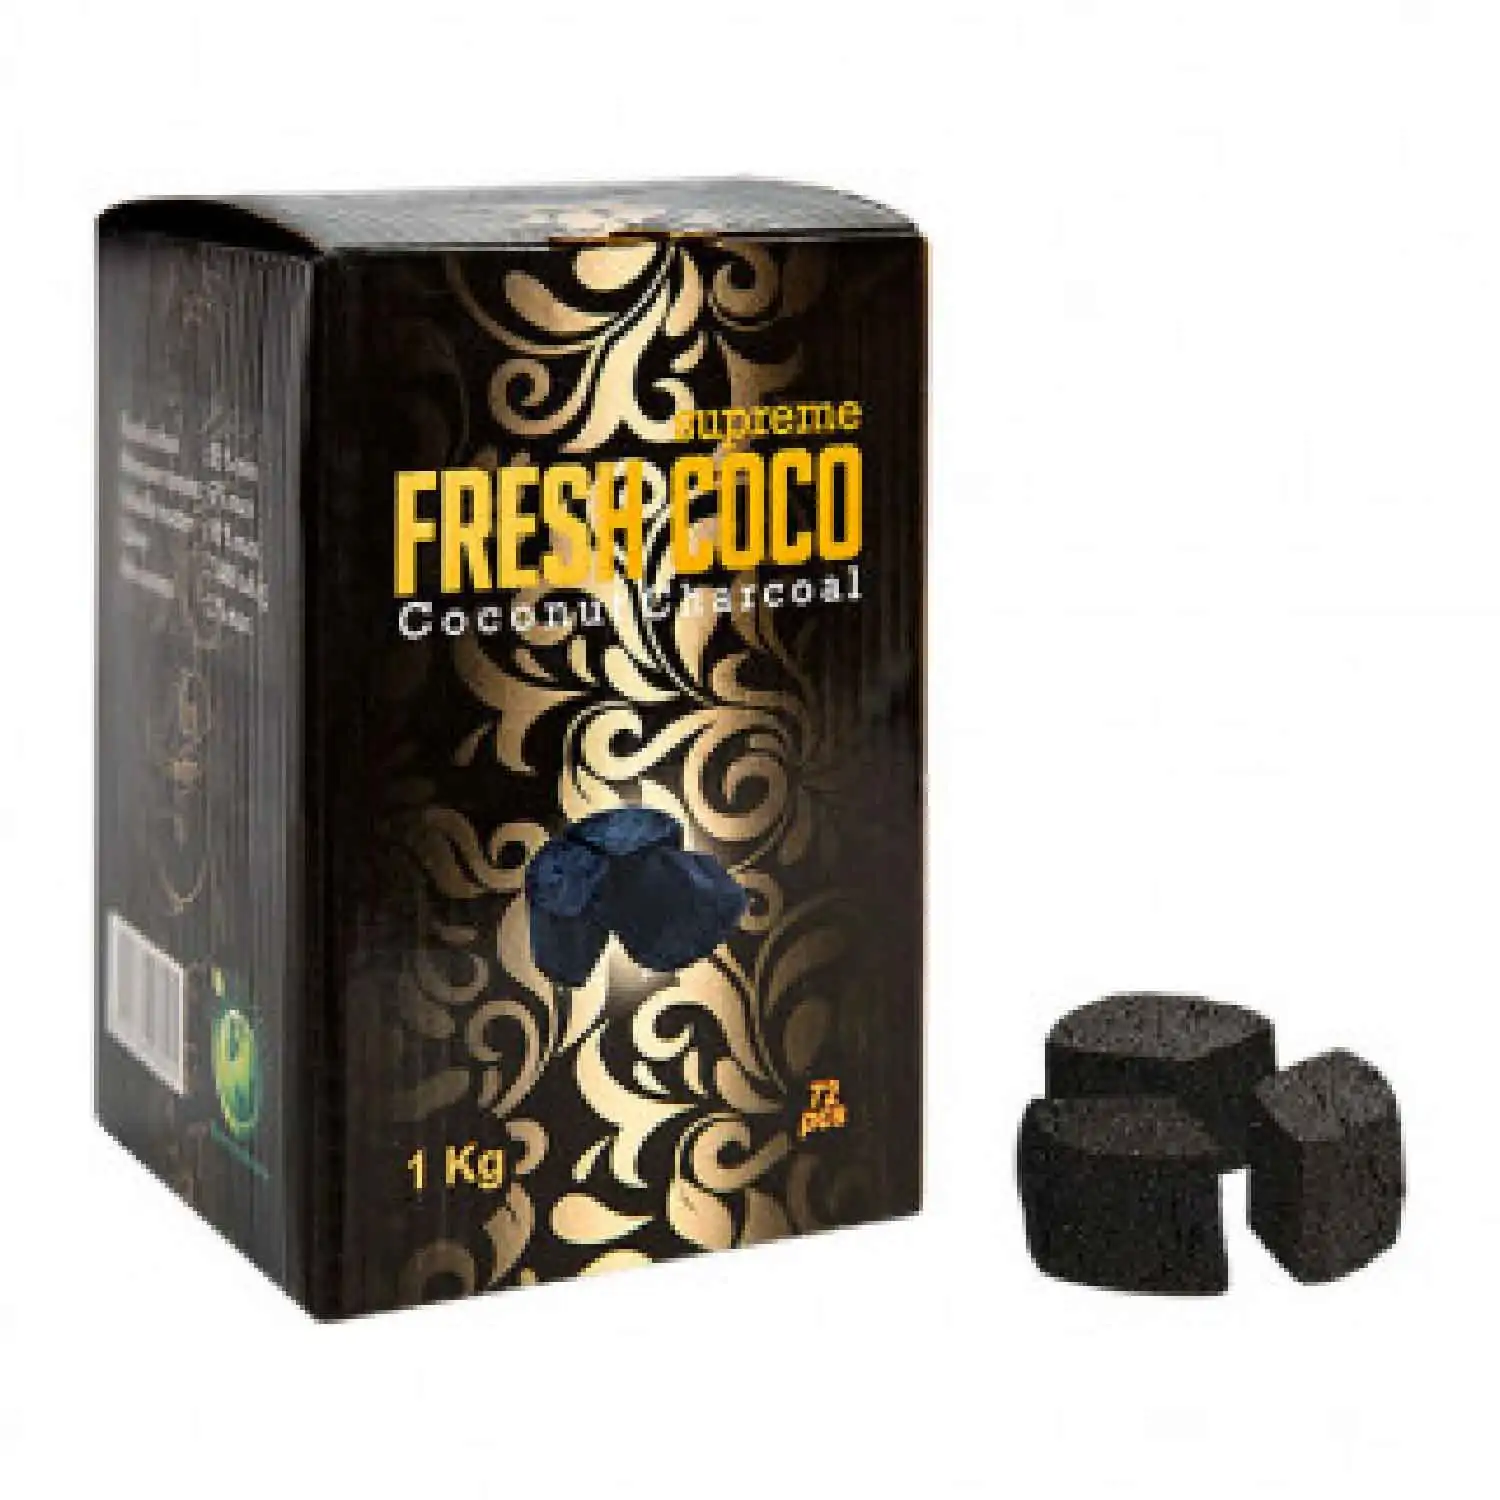 Fresh coco supreme charbon 1kg - Buy at Real Tobacco